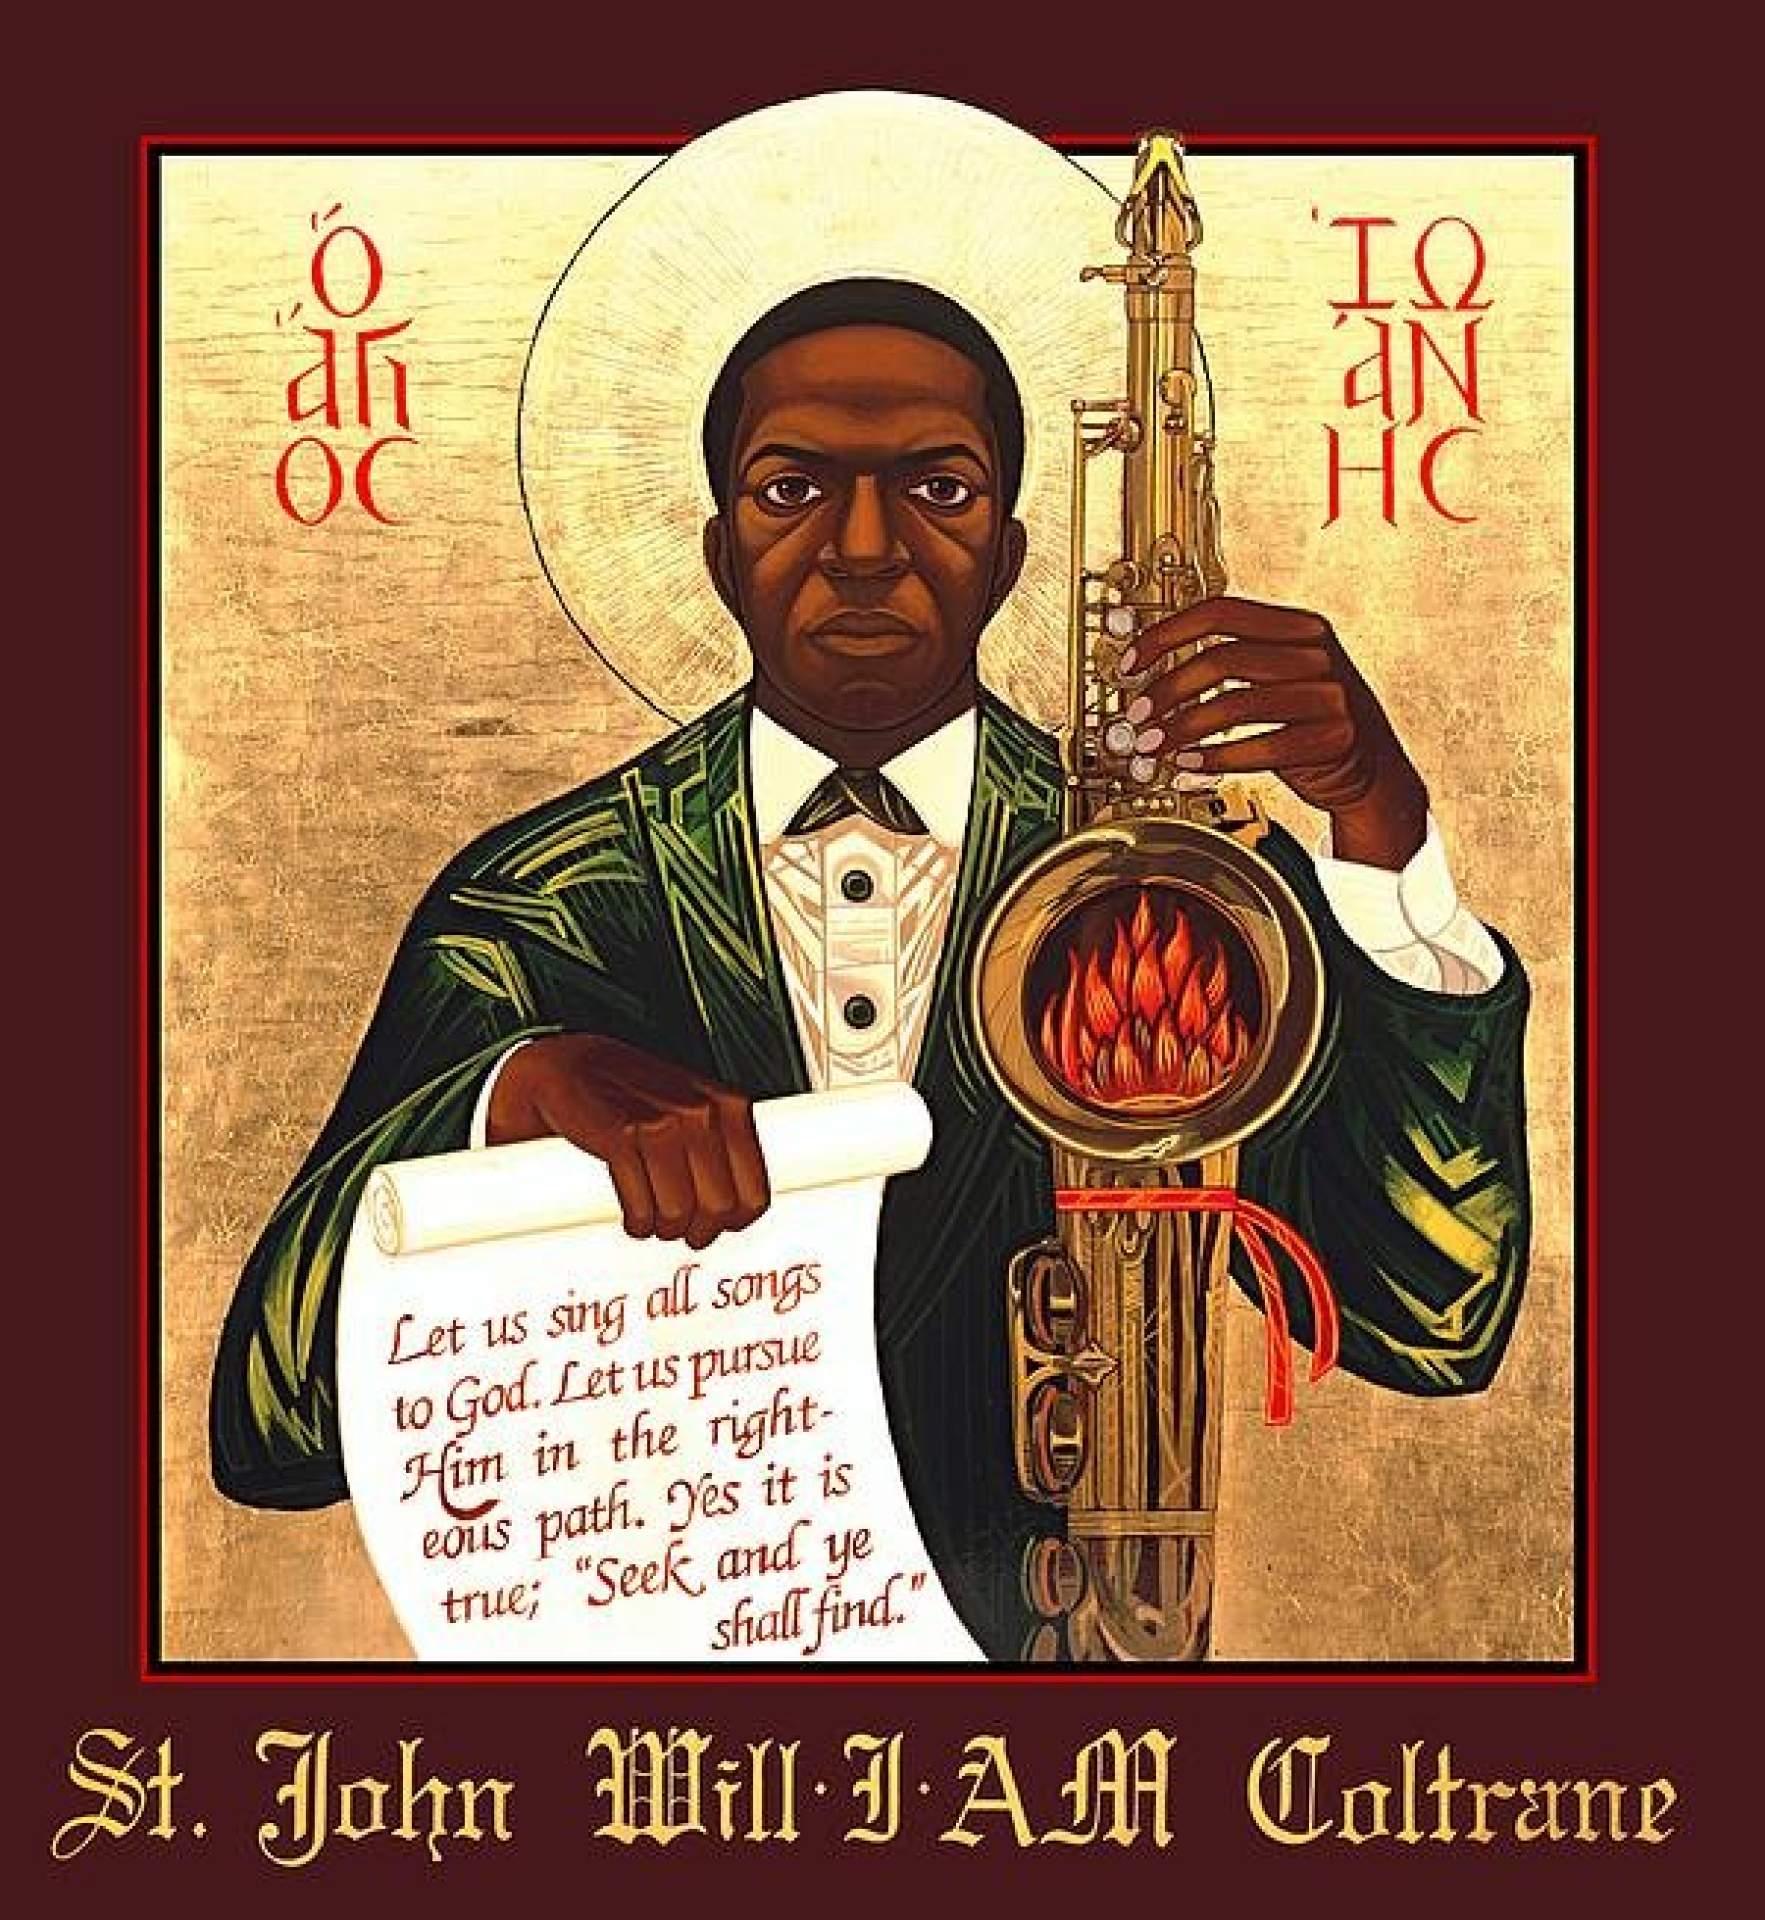 Coltrane Short Films: The Church of St. John Coltrane/Interview with John Coltrane June 15, 1958